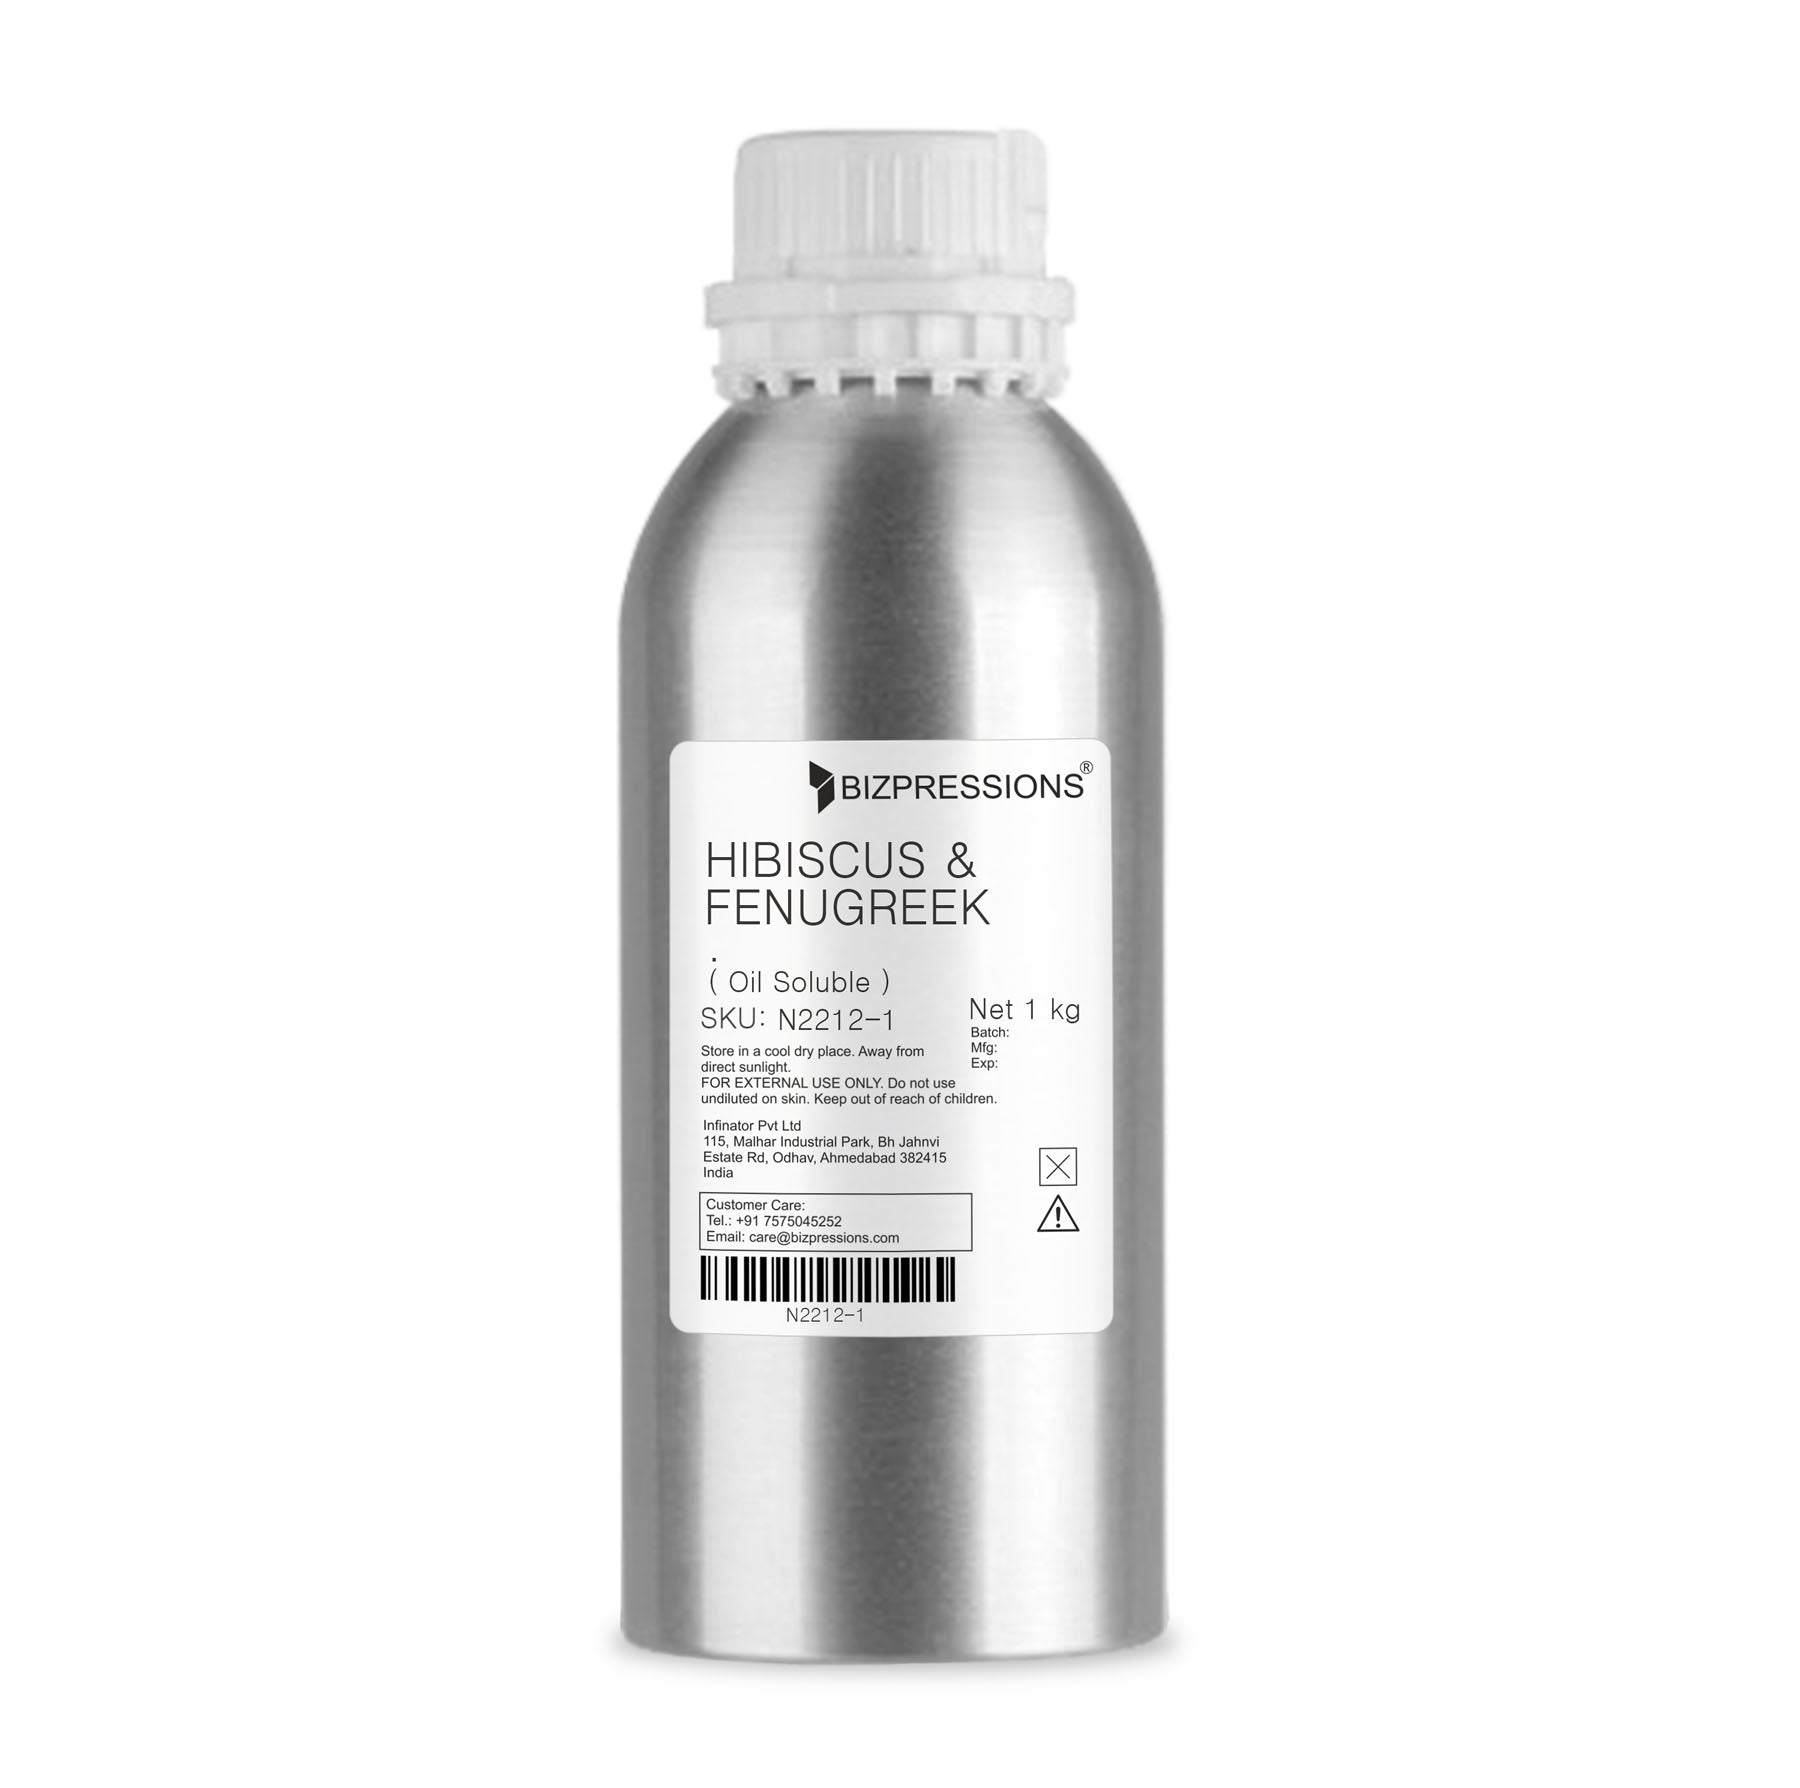 HIBISCUS & FENUGREEK - Fragrance ( Oil Soluble ) - 1 kg